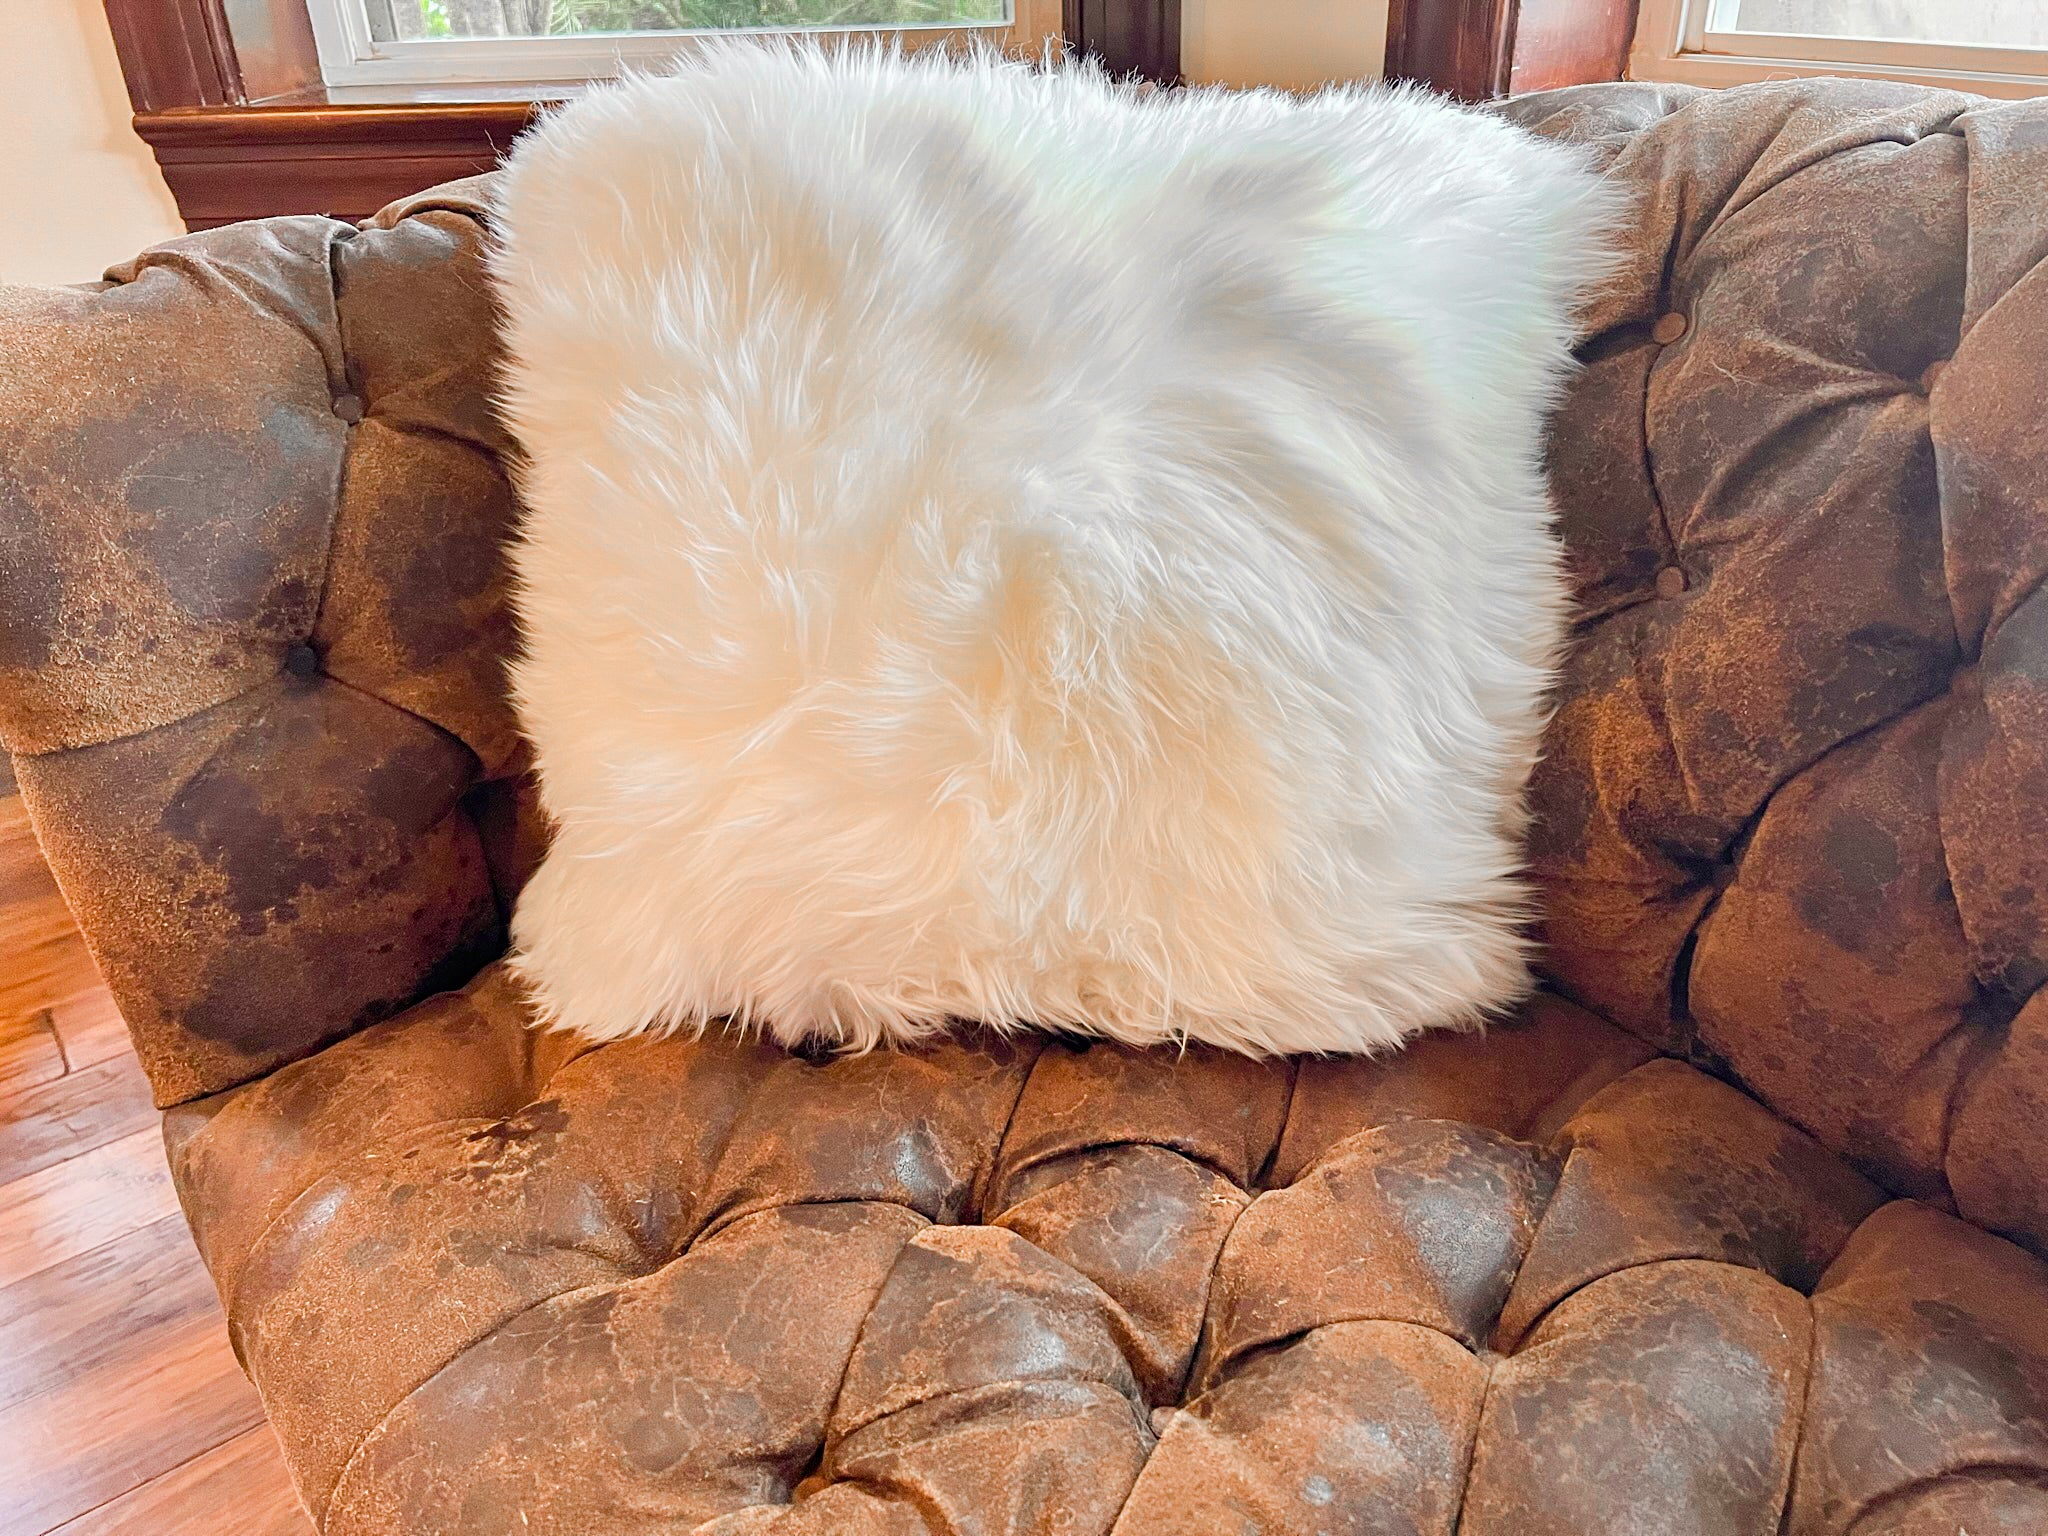 White New Zealand Sheepskin Pillow 16"x16" Single Sided by Hudson Hides